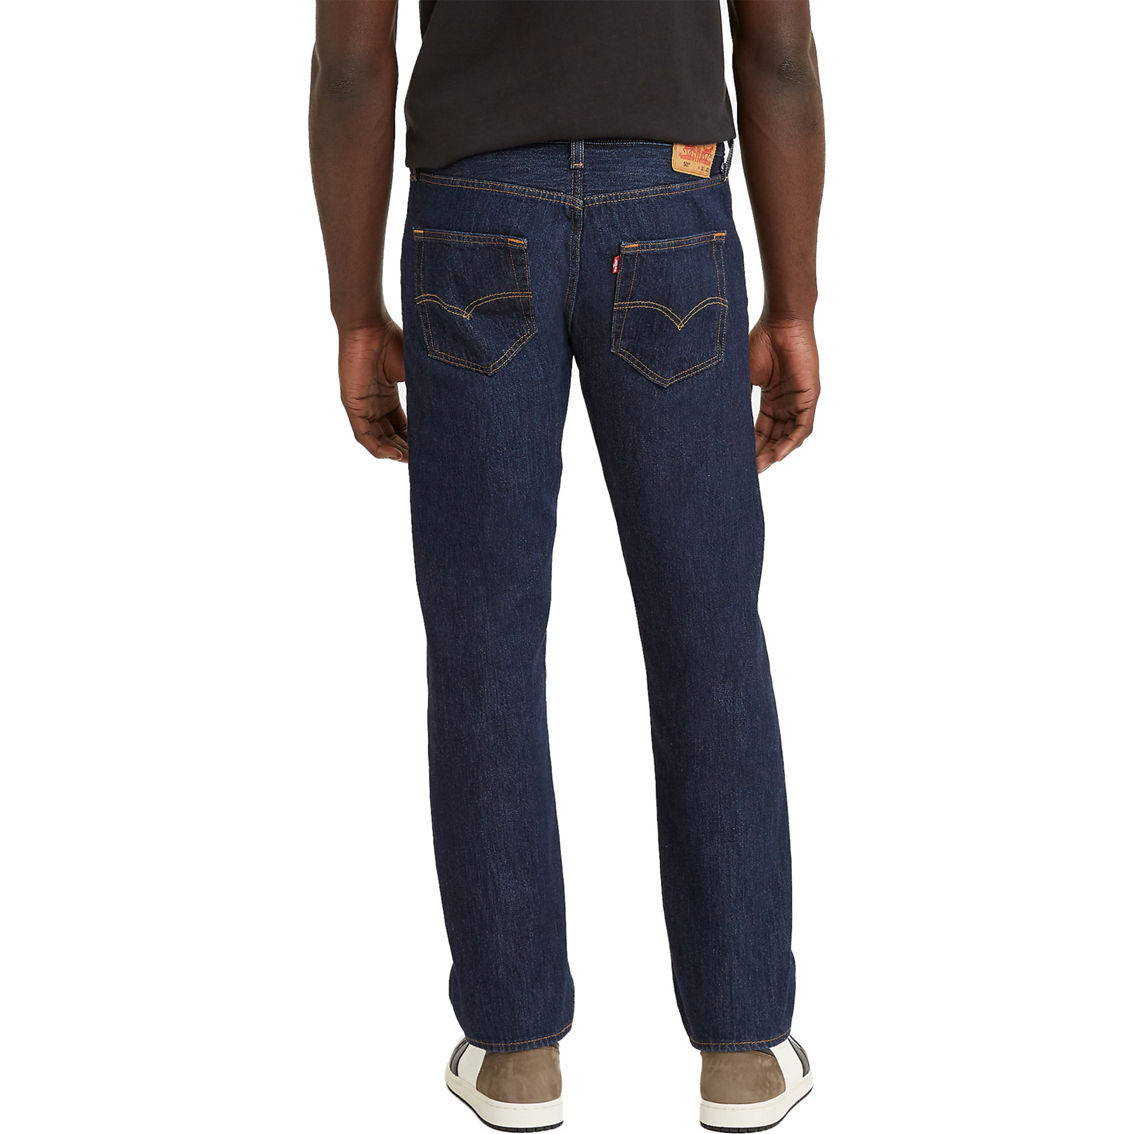 Levi's 501 Original Rinse Jeans - Image 2 of 3